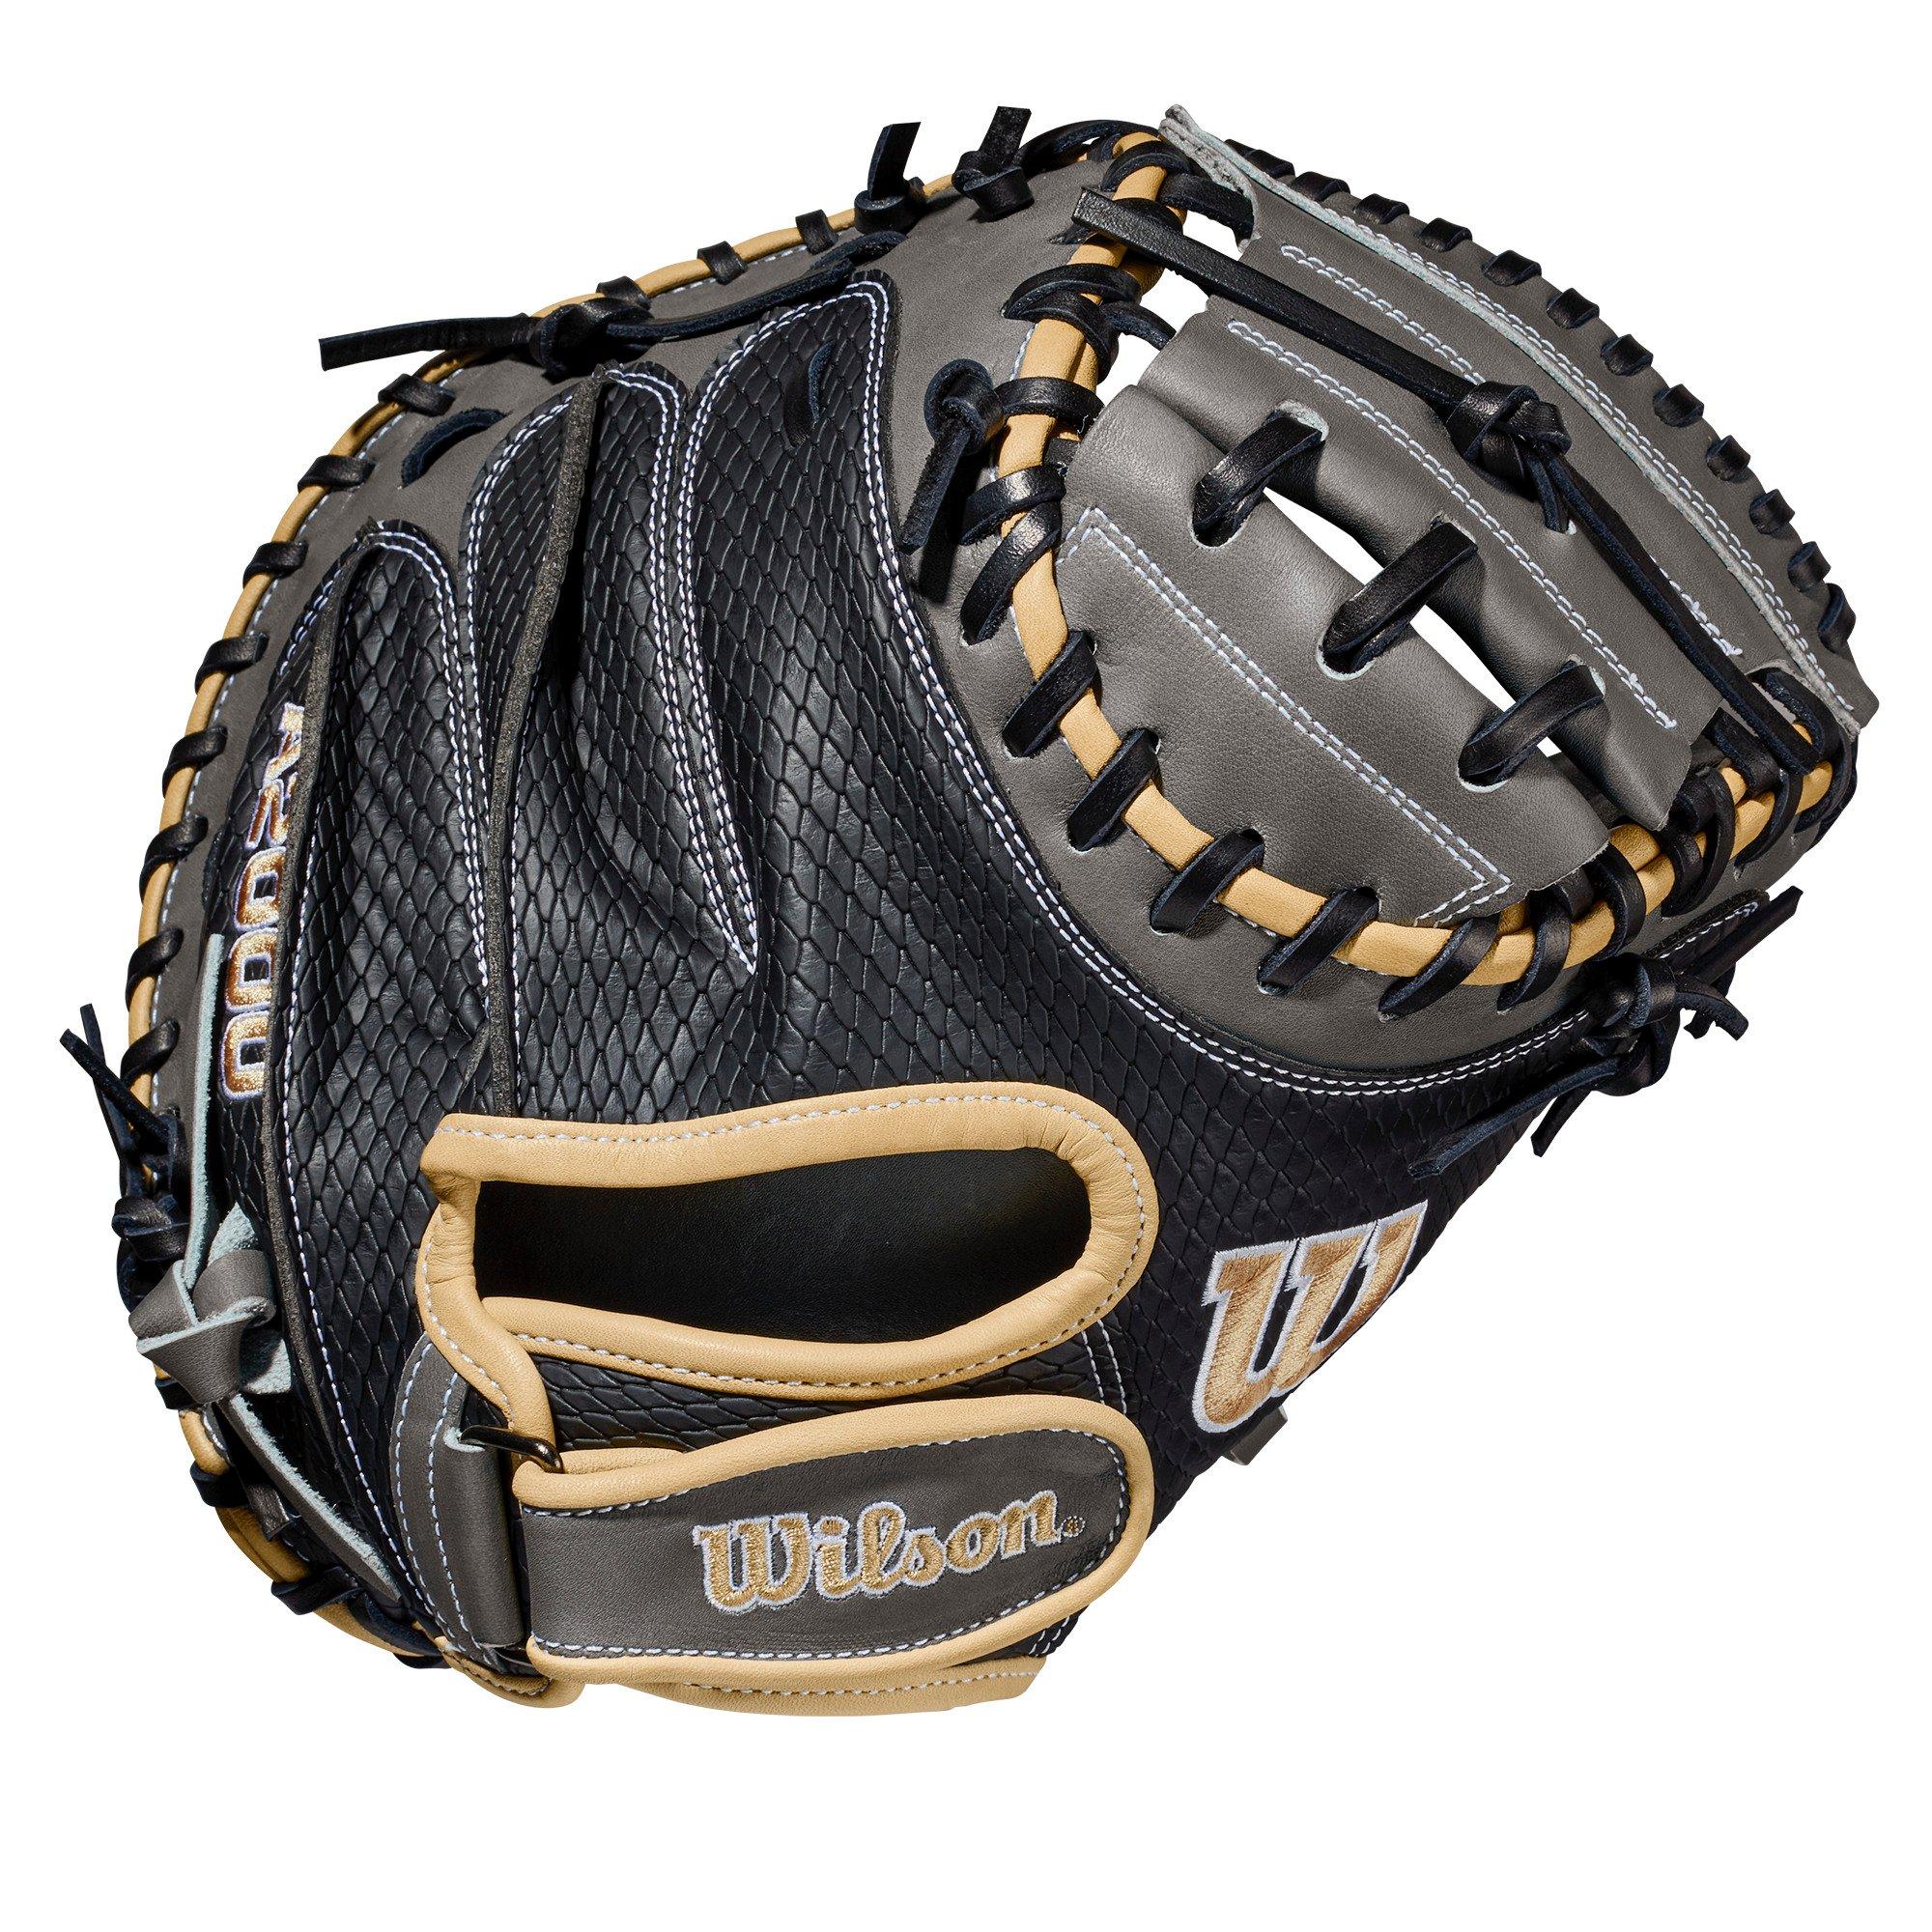 Details about   2021 Wilson A2000 33" Adult Baseball Catcher's Mitt PF33SS Pedroia Fit Model 